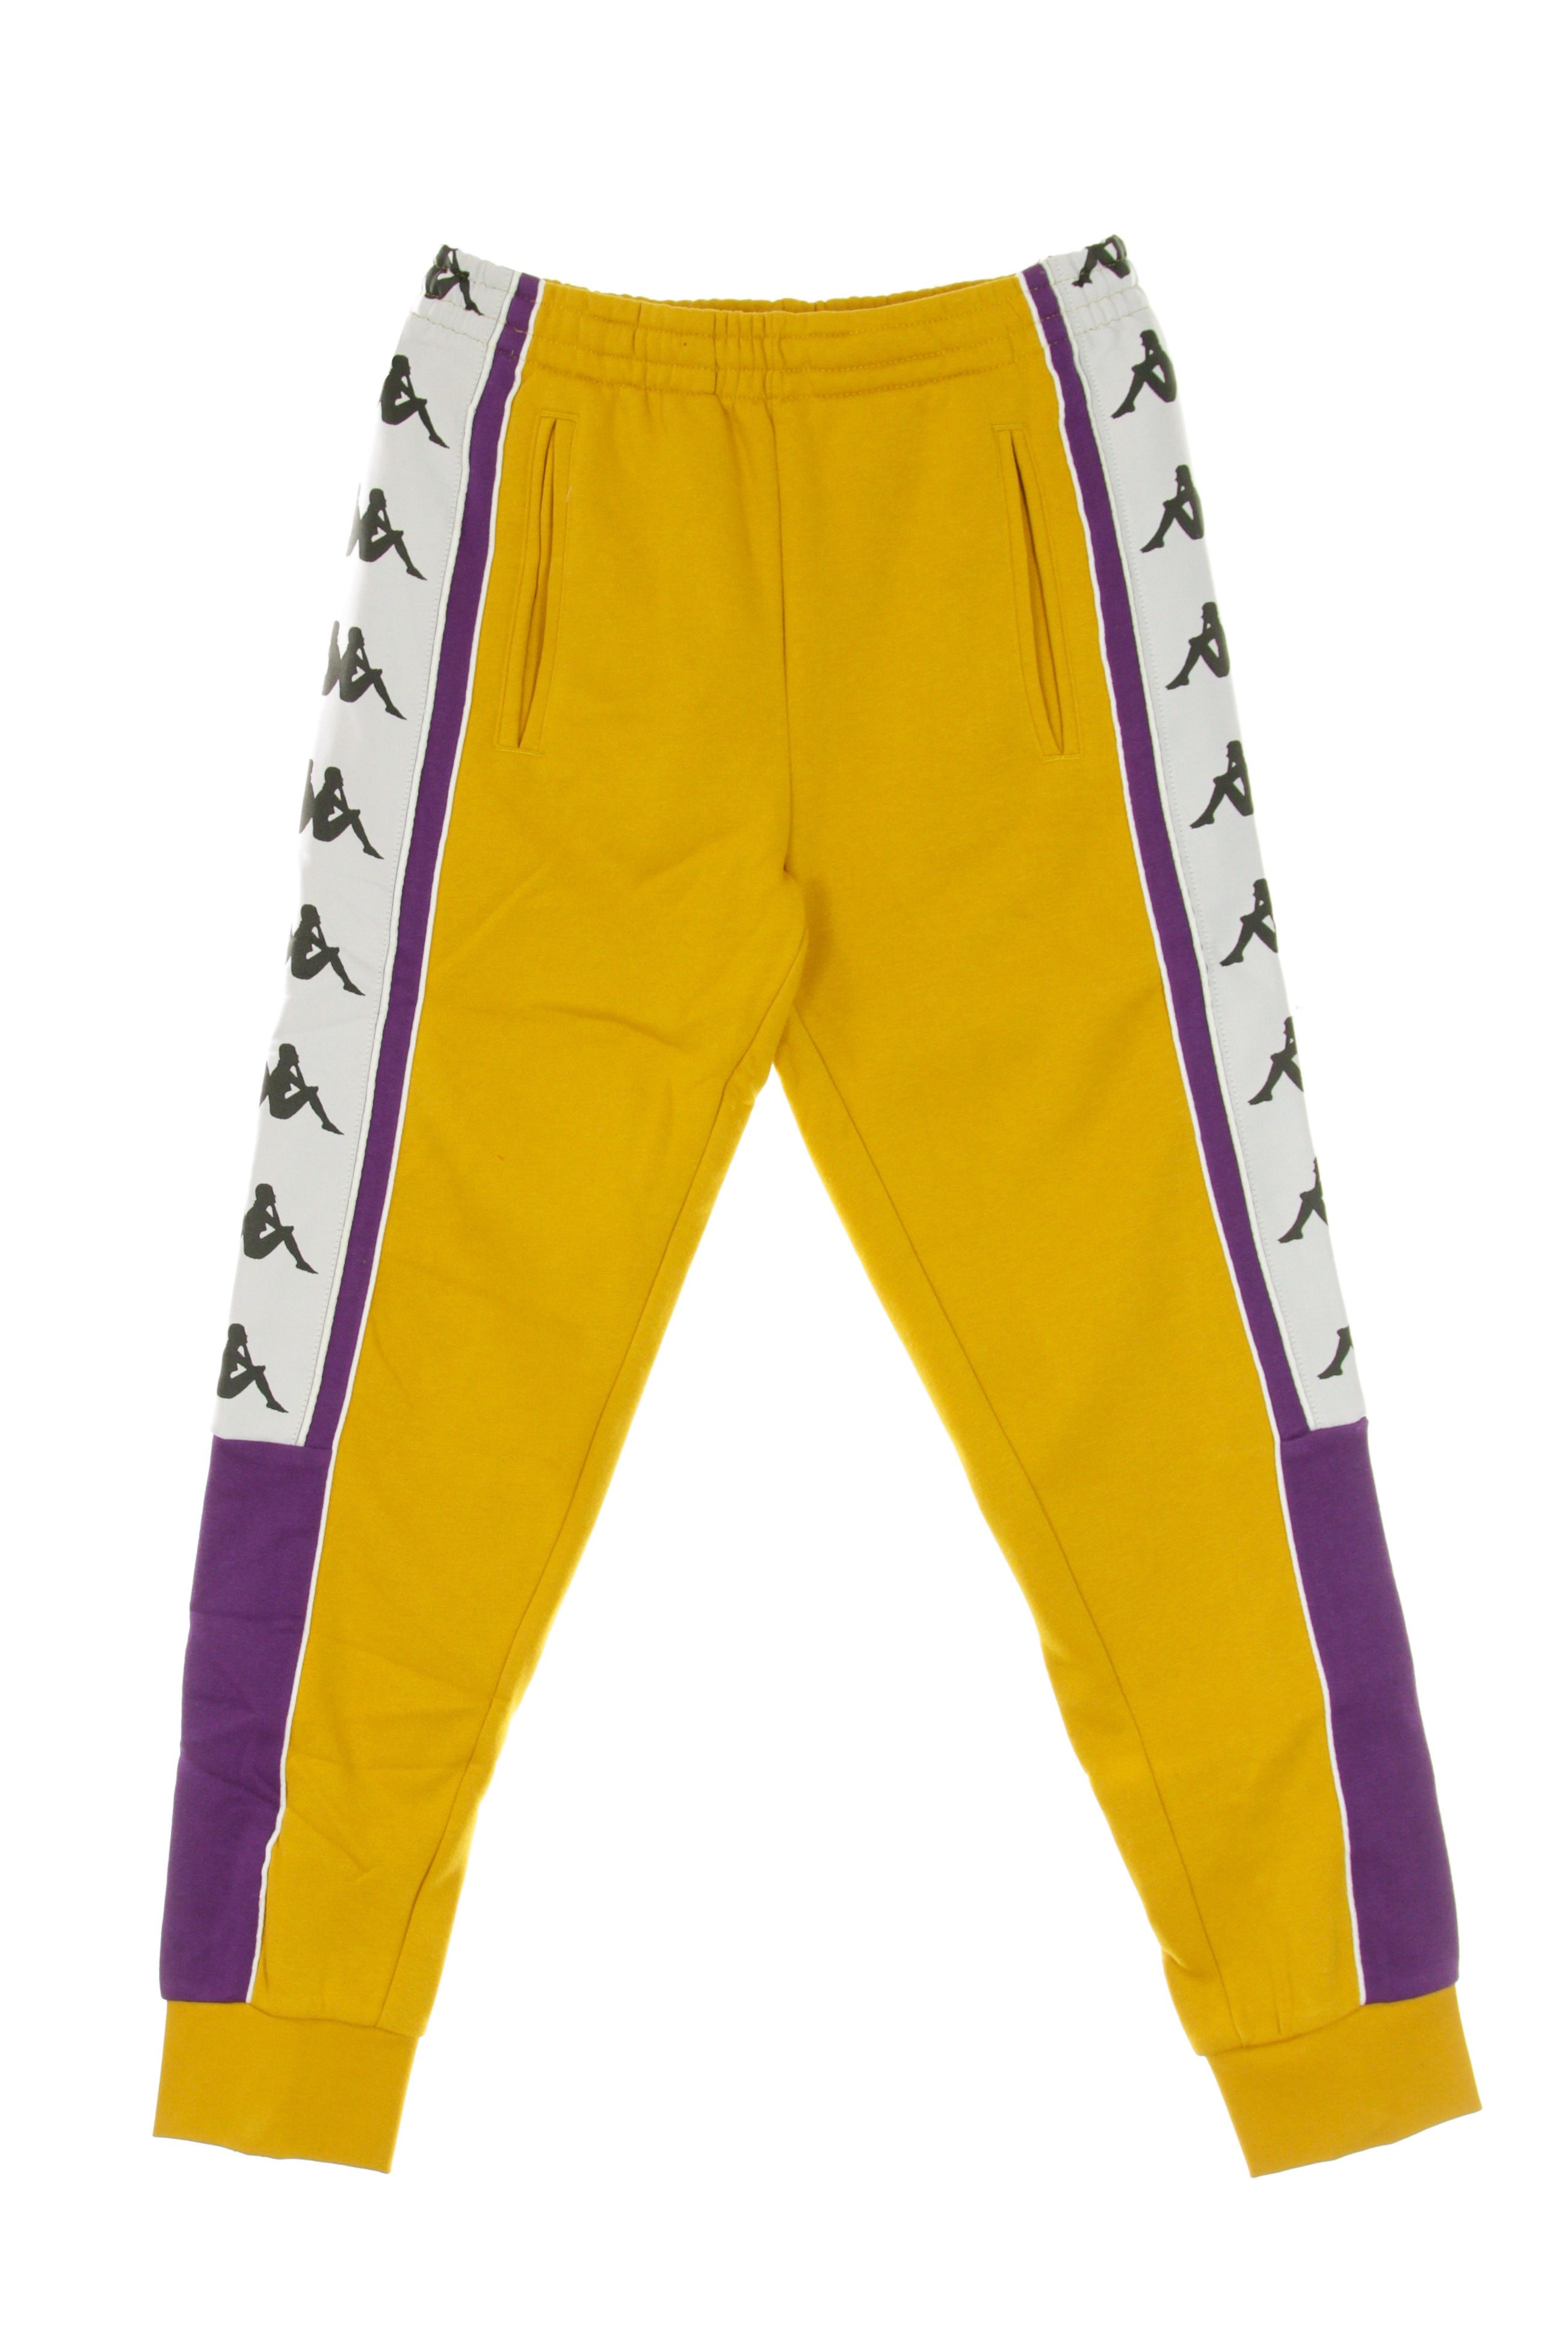 Banda 10 Delaz Men's Fleece Tracksuit Pants Yellow Ochre/violet/white